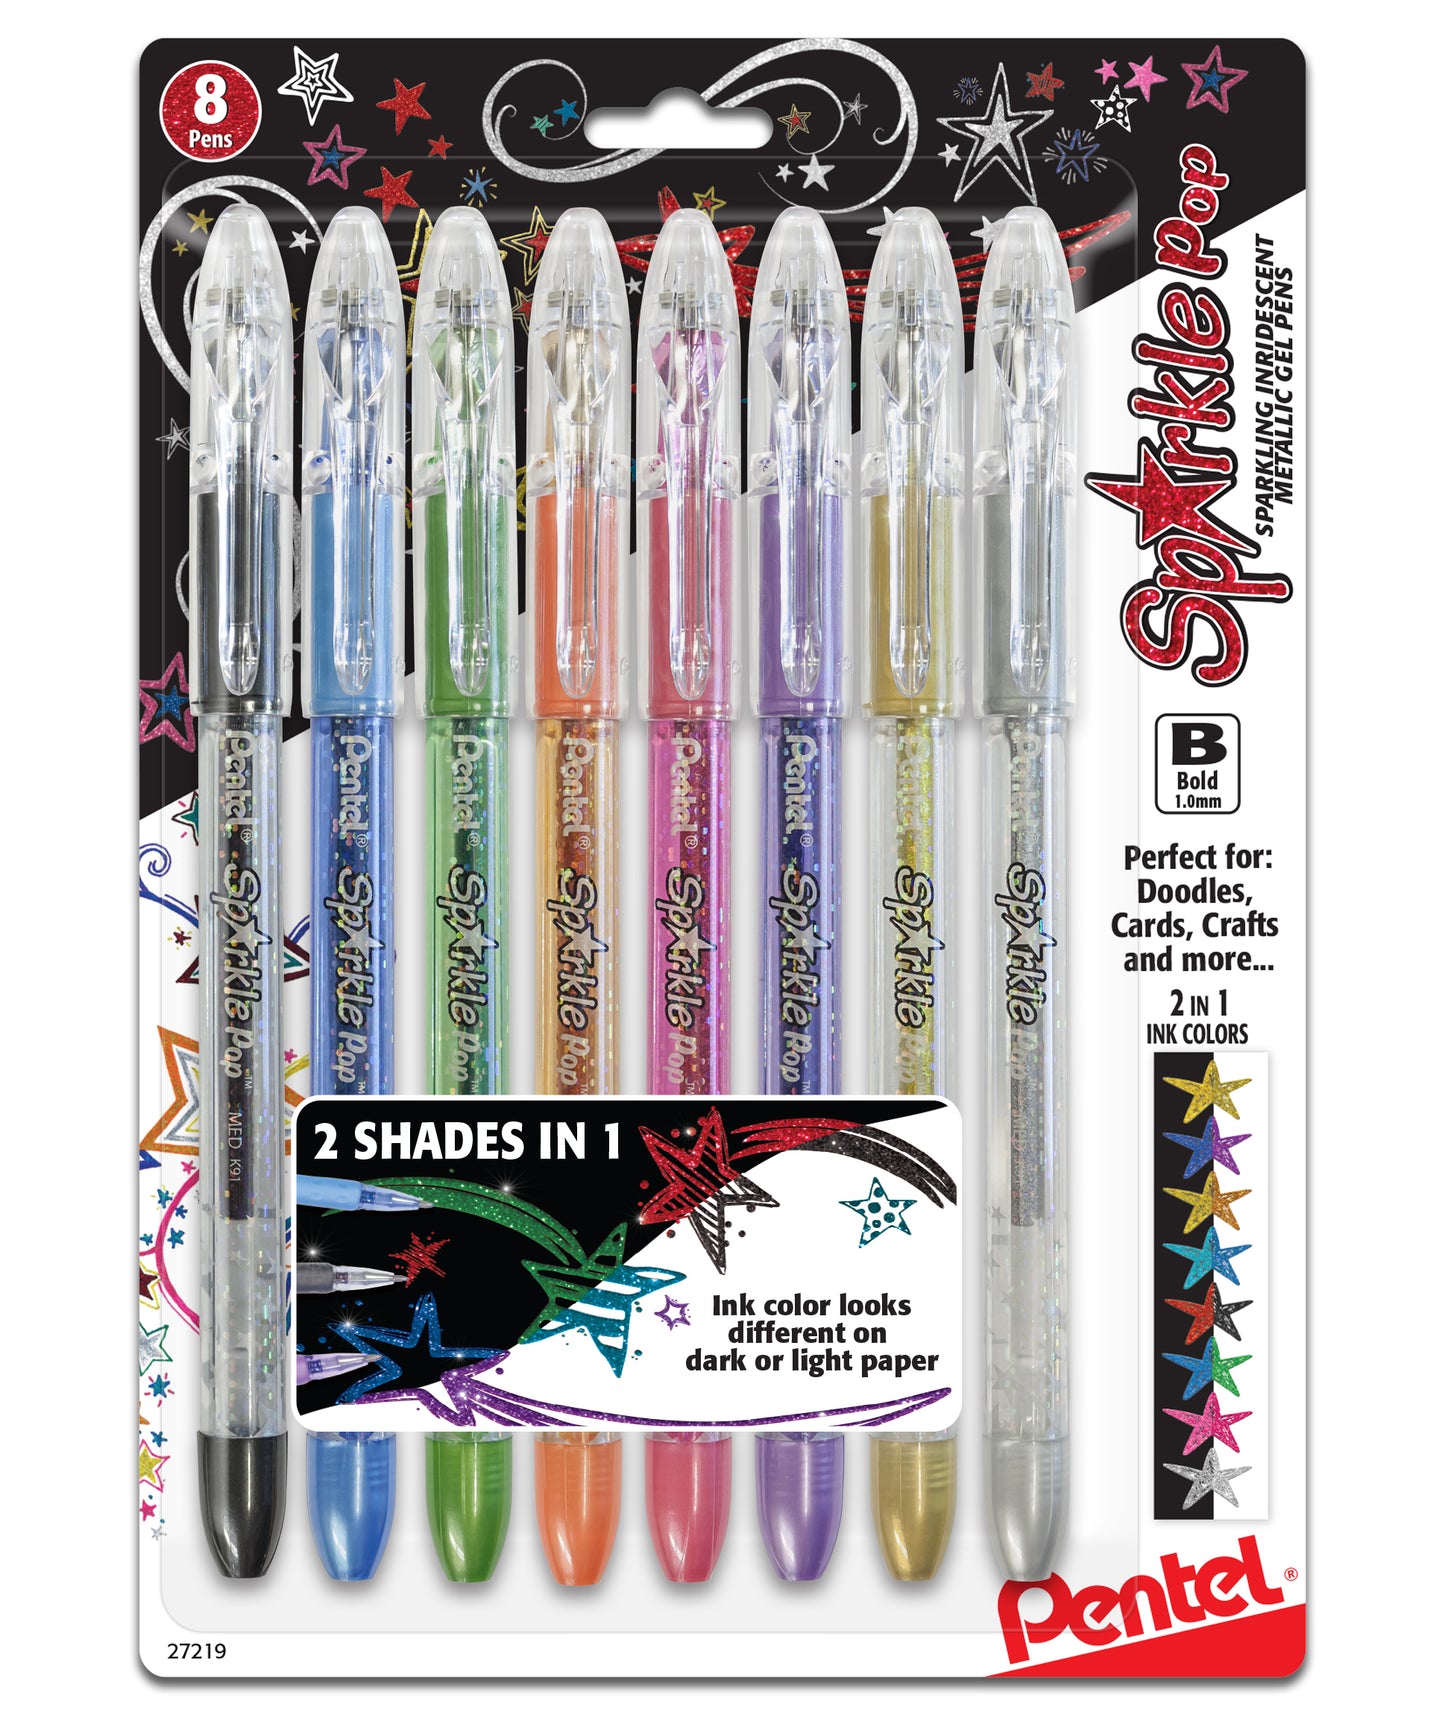 Sparkly Pens